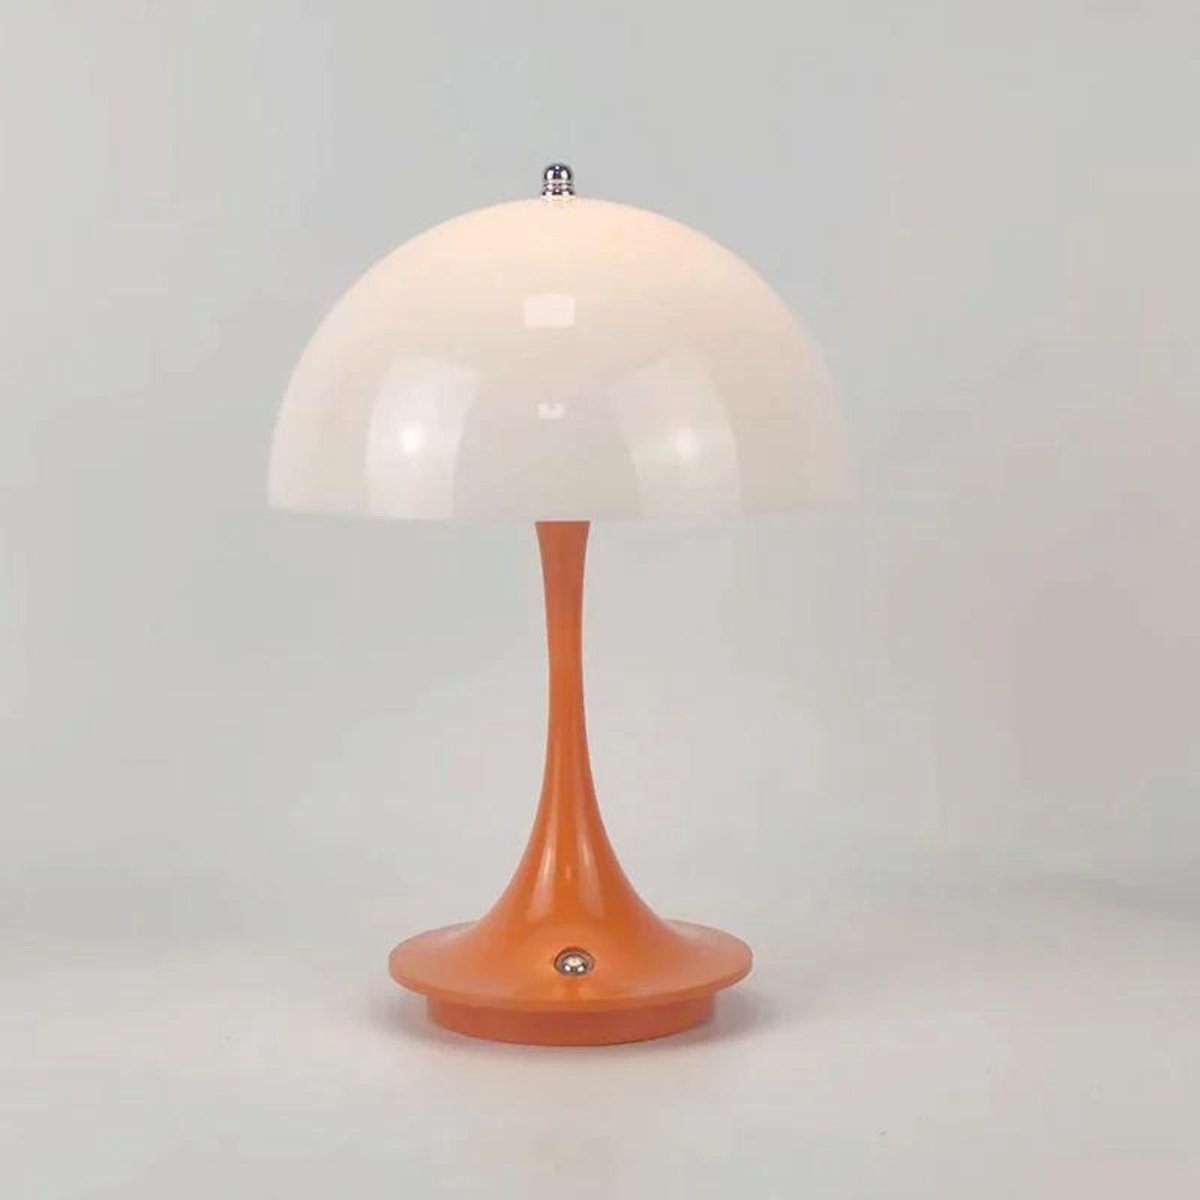 Decor Lola - Panthella Tafellamp - LED - Staal - Draadloos - Mushroom lamp - Paddenstoelen lamp - dimbaar